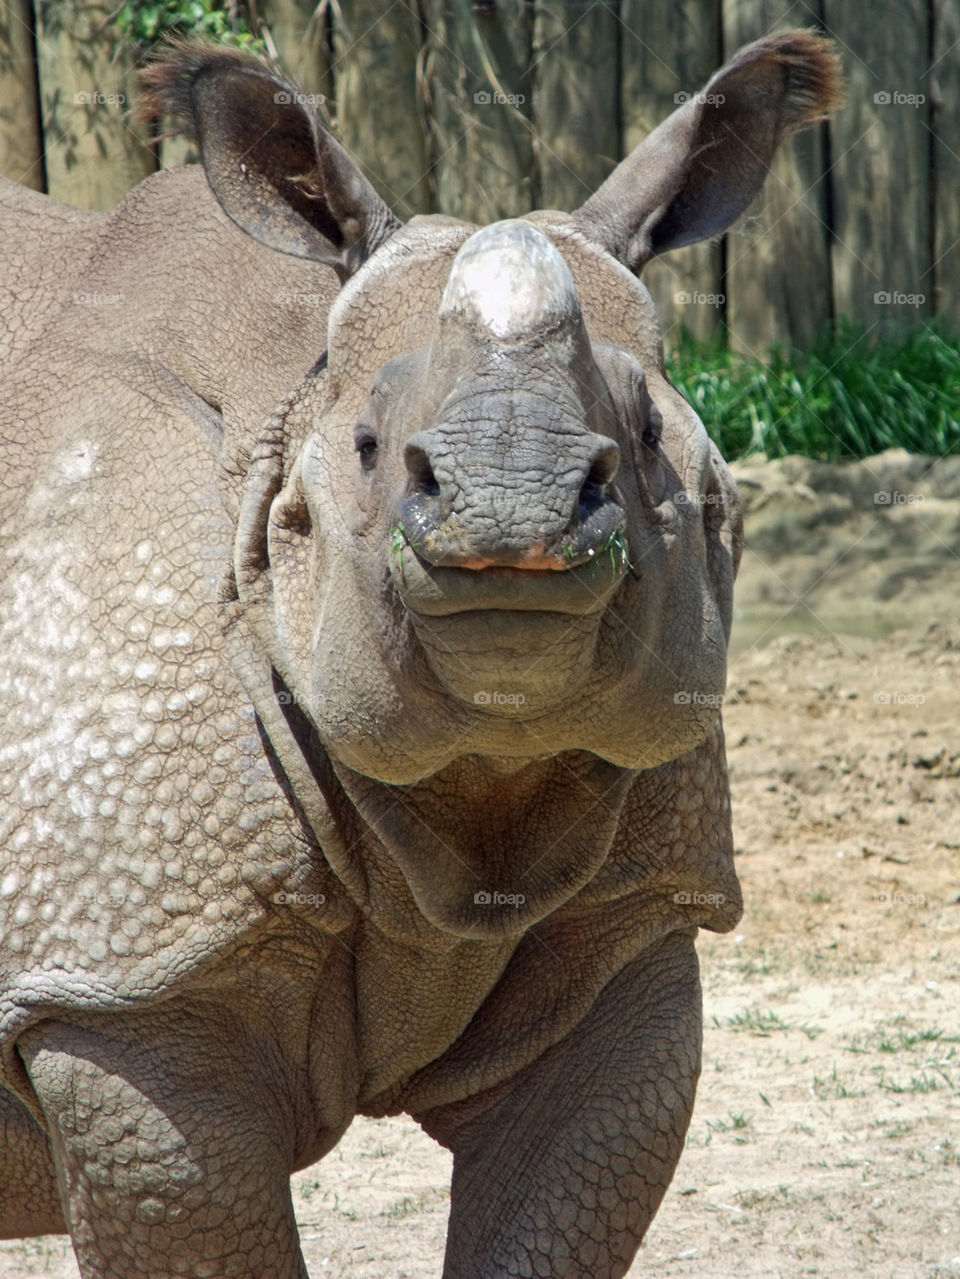 rhinoceros face